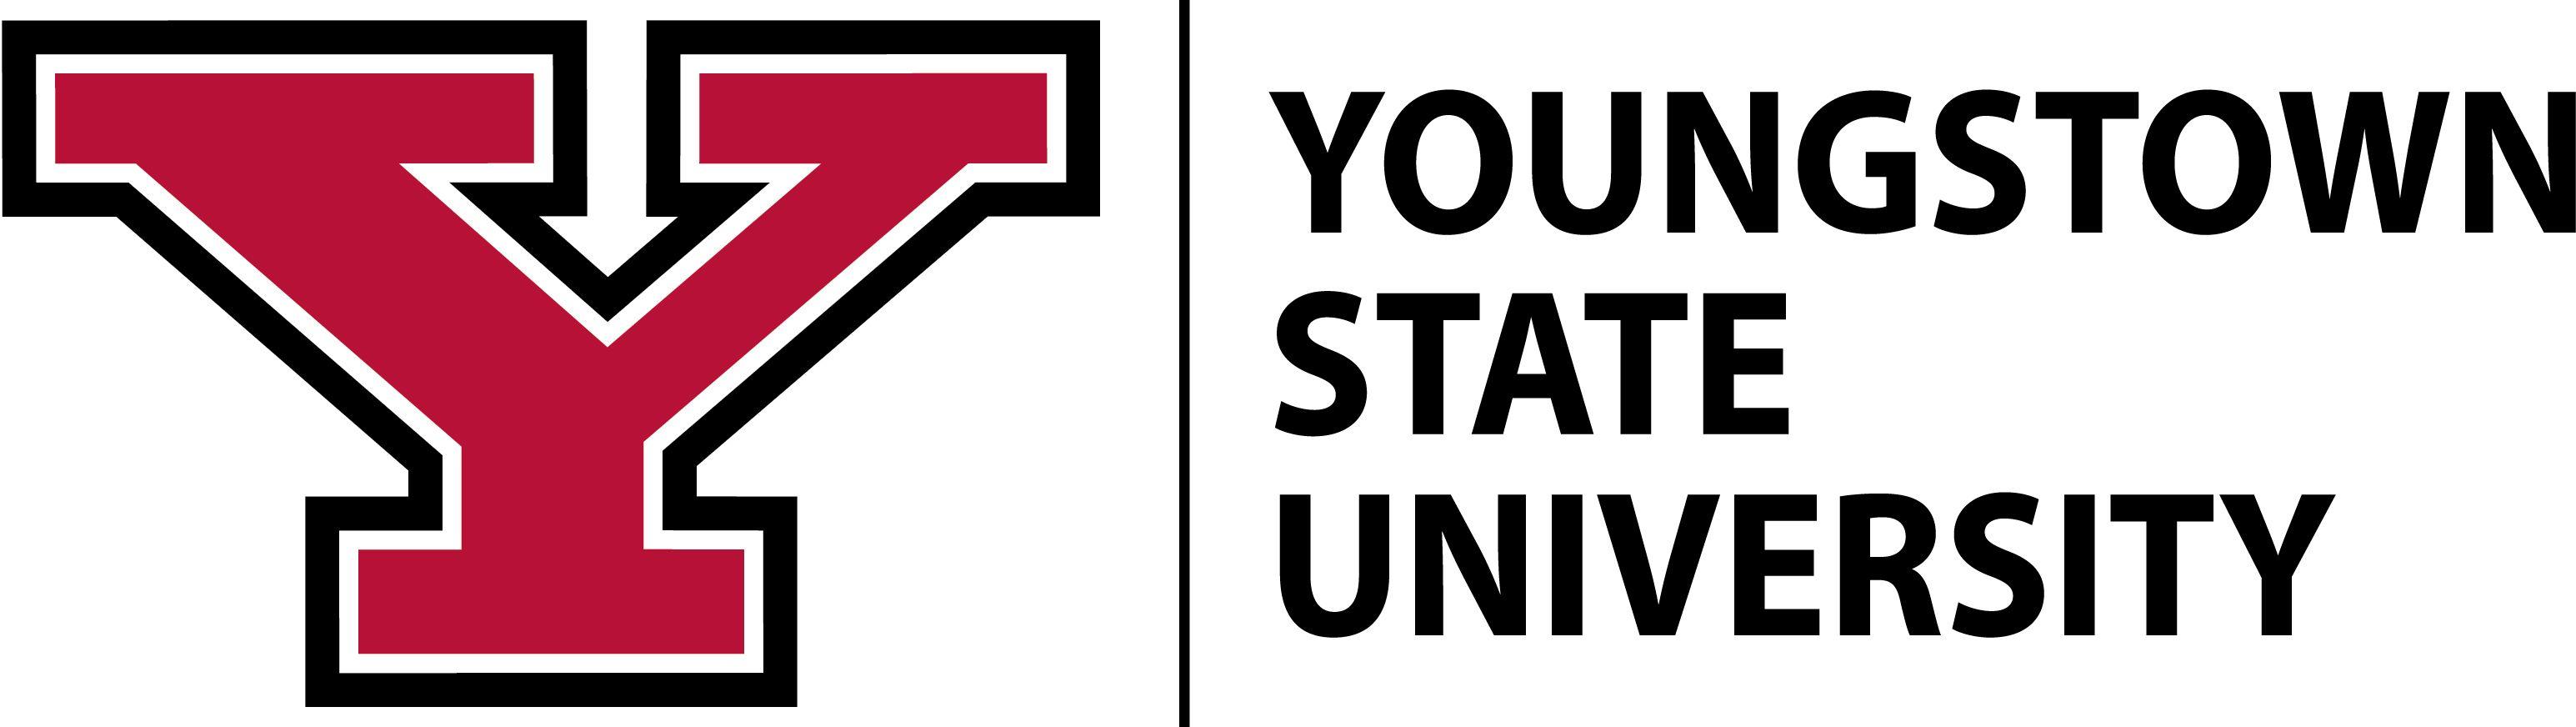 Youngstown Logo - YSU confirms some football players failed NCAA testing - Taylor Hooton